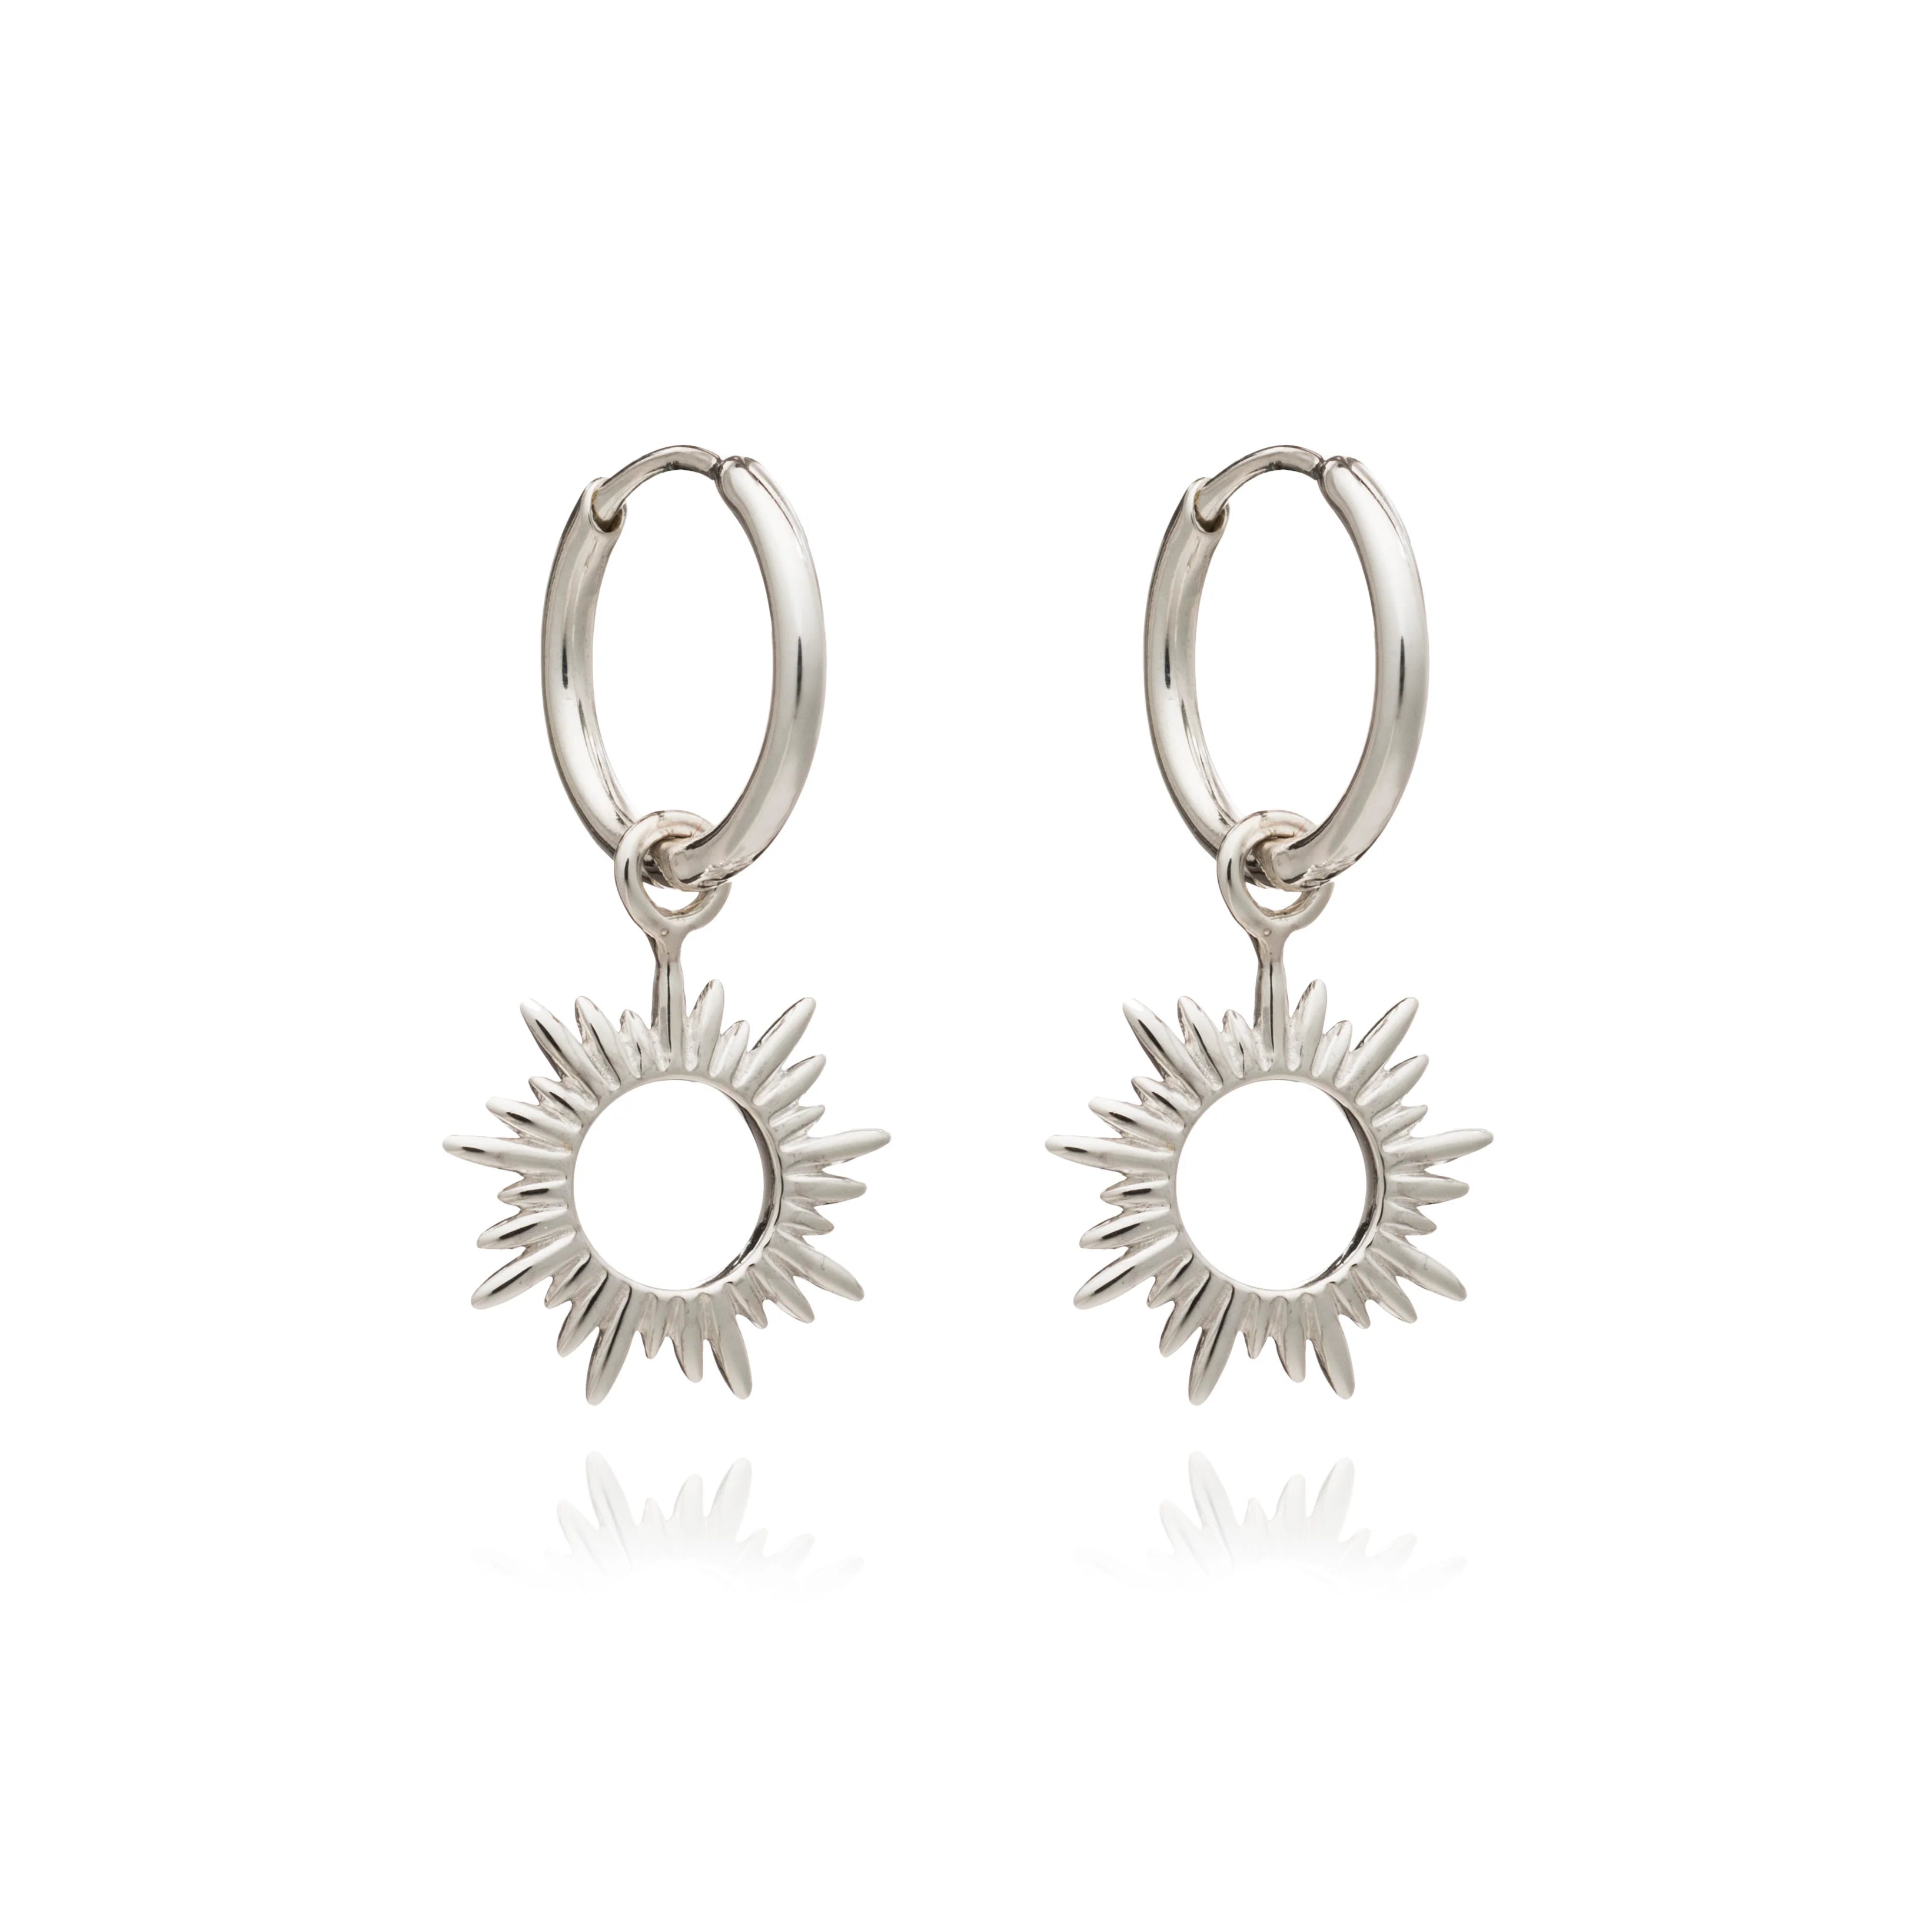 Eternal Sun Mini Hoop Earrings by Rachel Jackson, perfect for everyday wear.